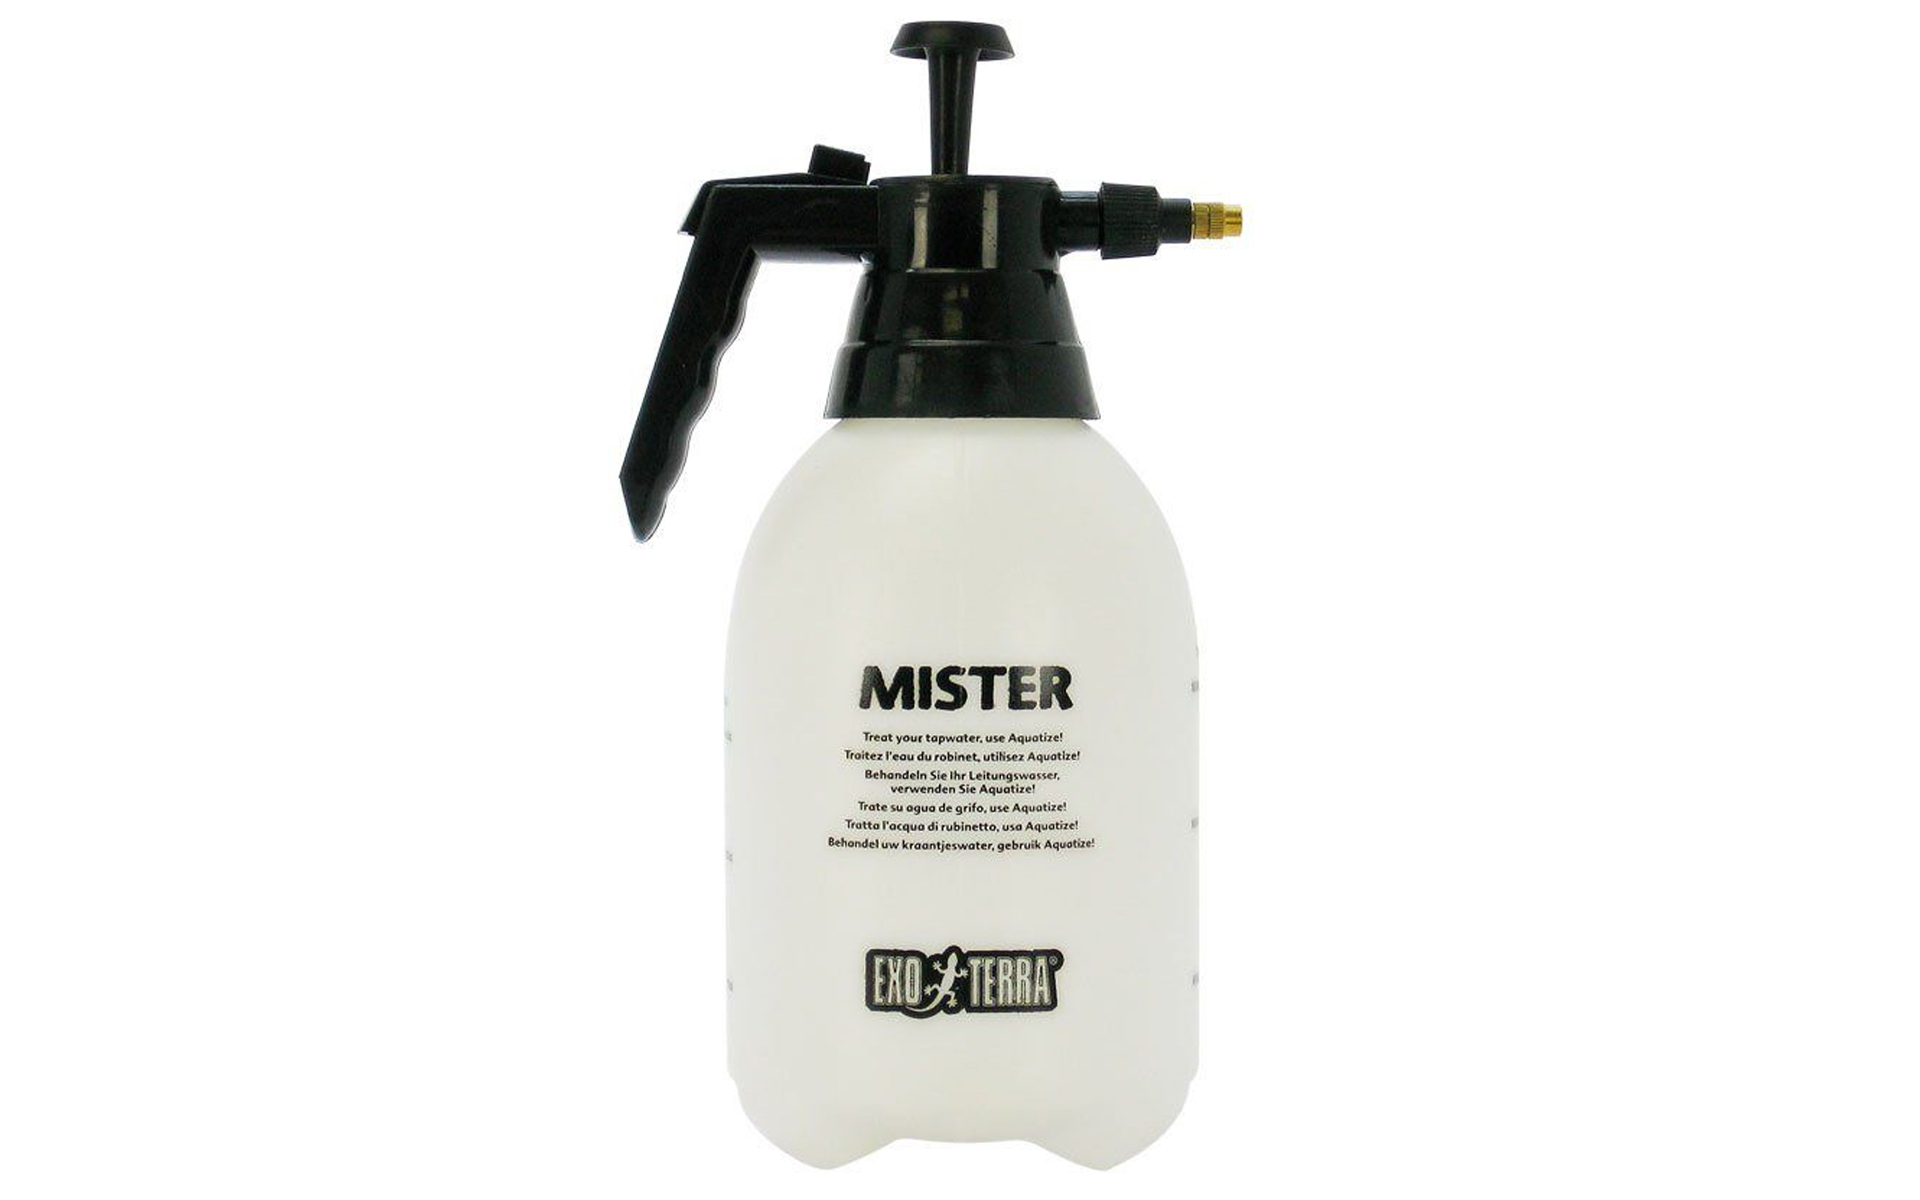 Mister - Pressure Sprayer, 2 Quarts